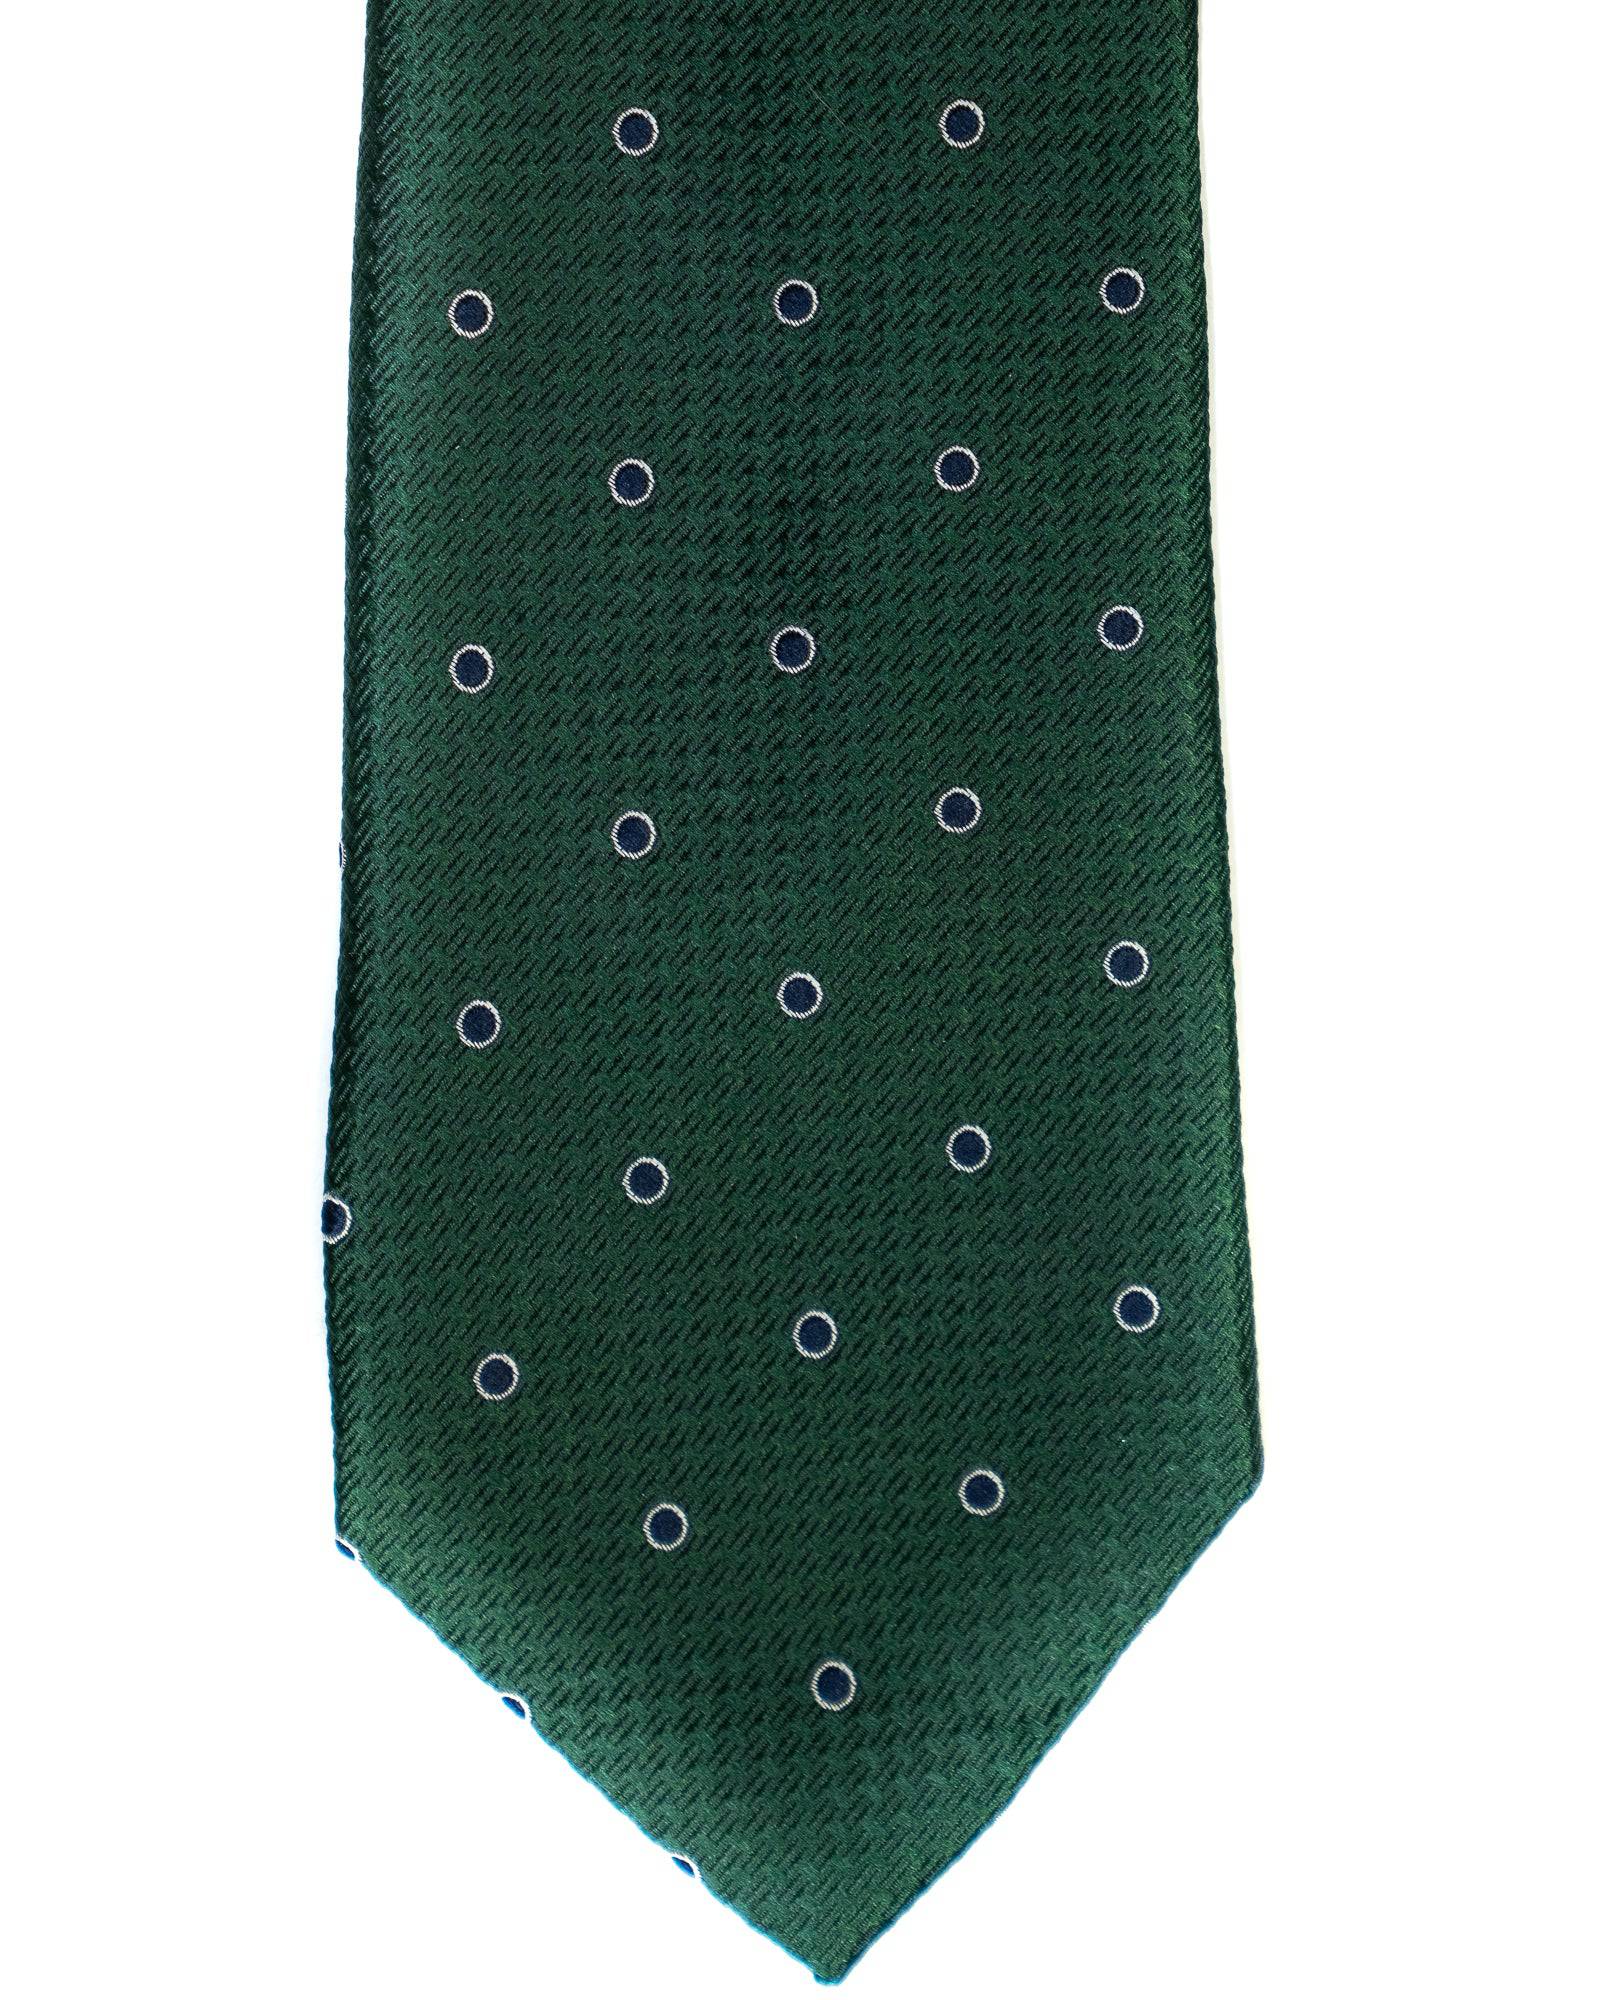 Silk Tie In Green With Navy Dot Foulard Print - Rainwater's Men's Clothing and Tuxedo Rental